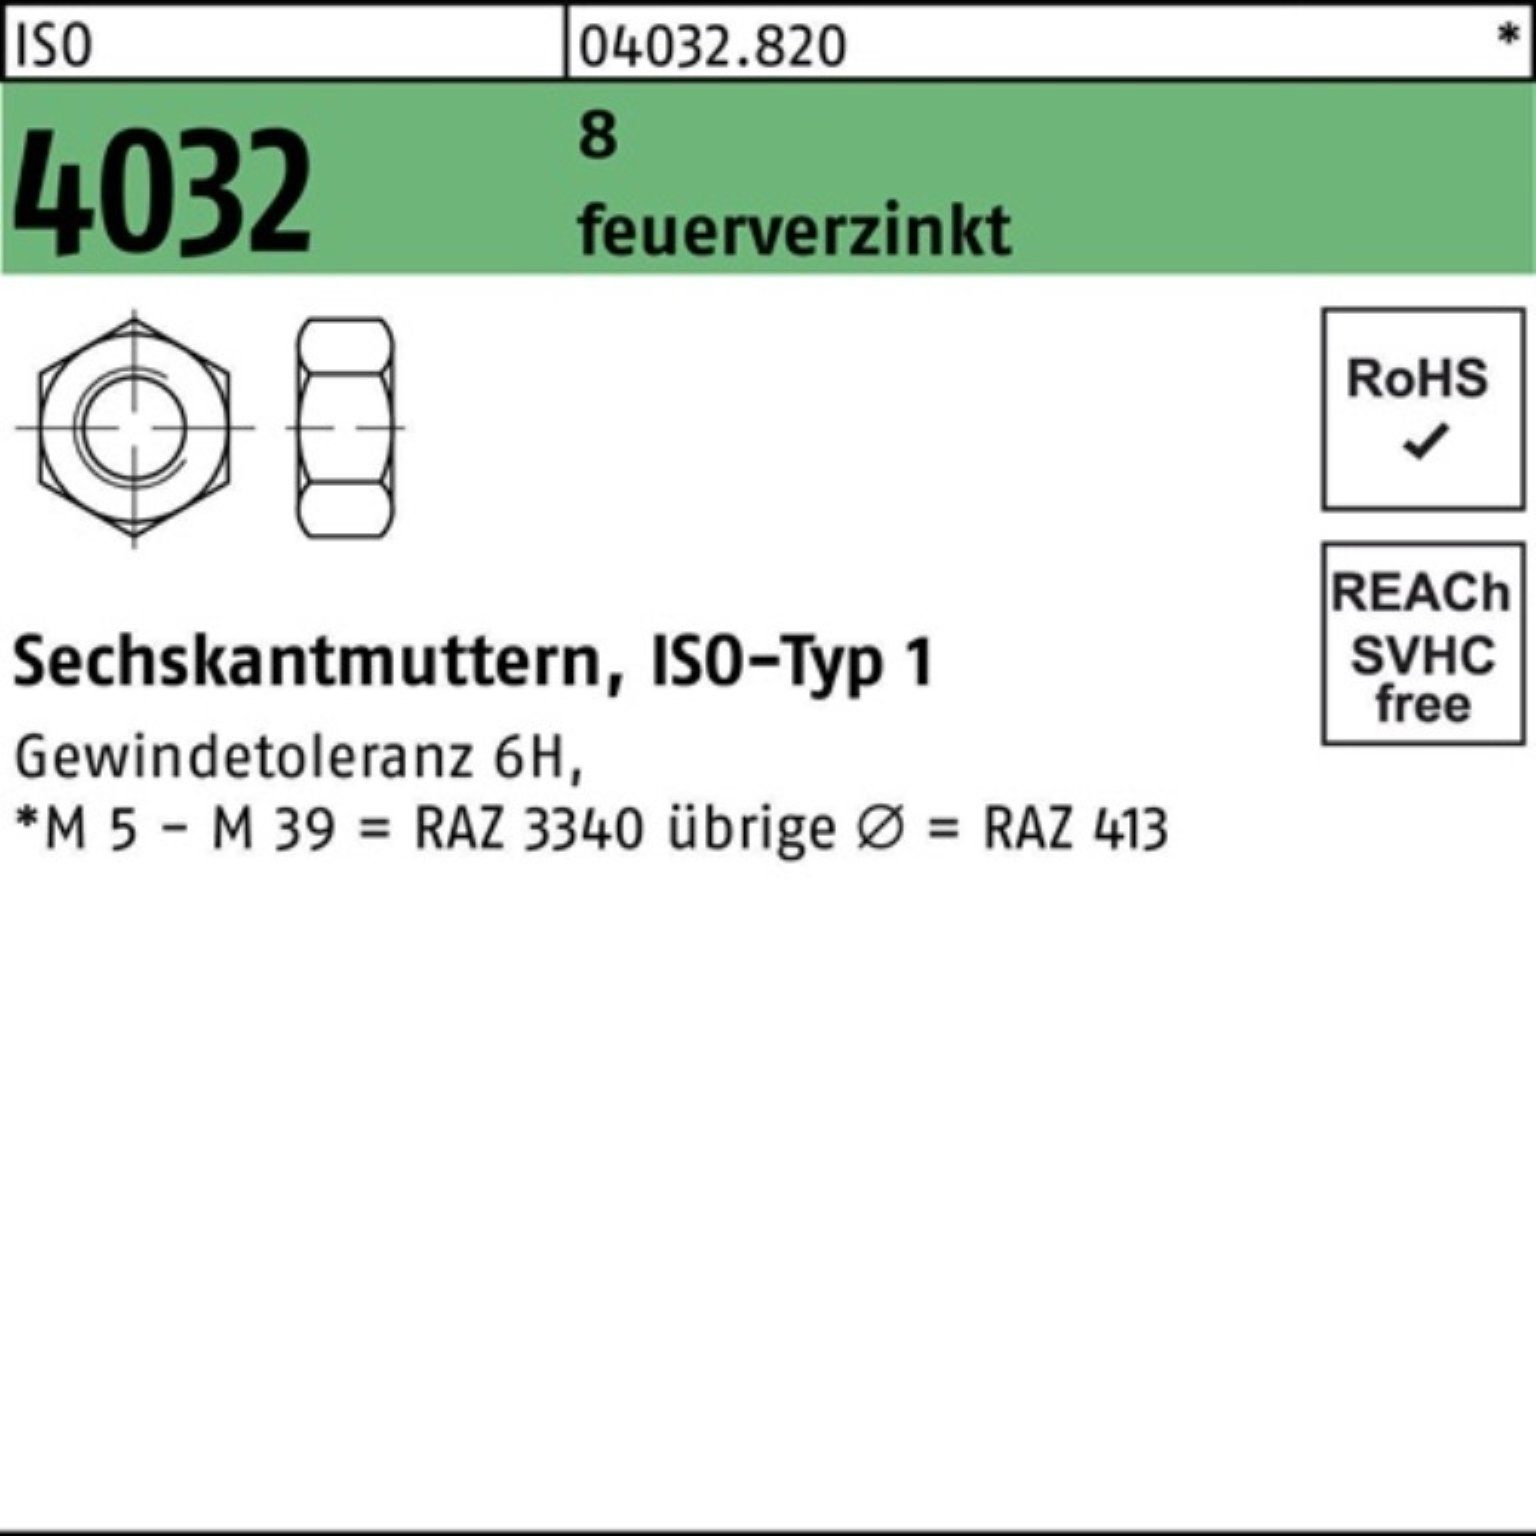 5 feuerverz. Sechskantmutter 100er ISO ISO Stück Bufab M42 Muttern 8 Pack 4032 4032